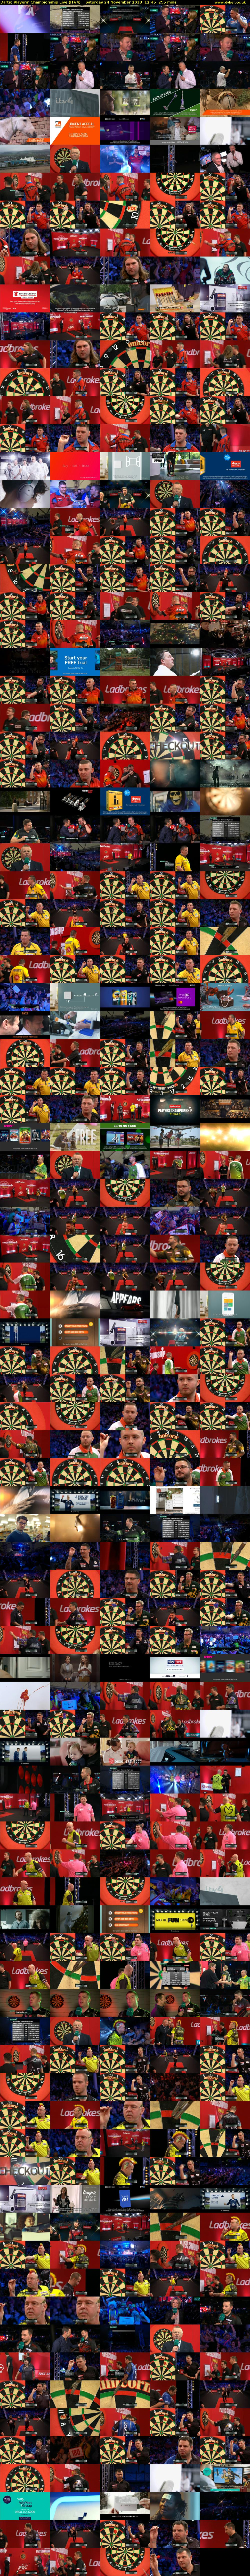 Darts: Players' Championship Live (ITV4) Saturday 24 November 2018 12:45 - 17:00